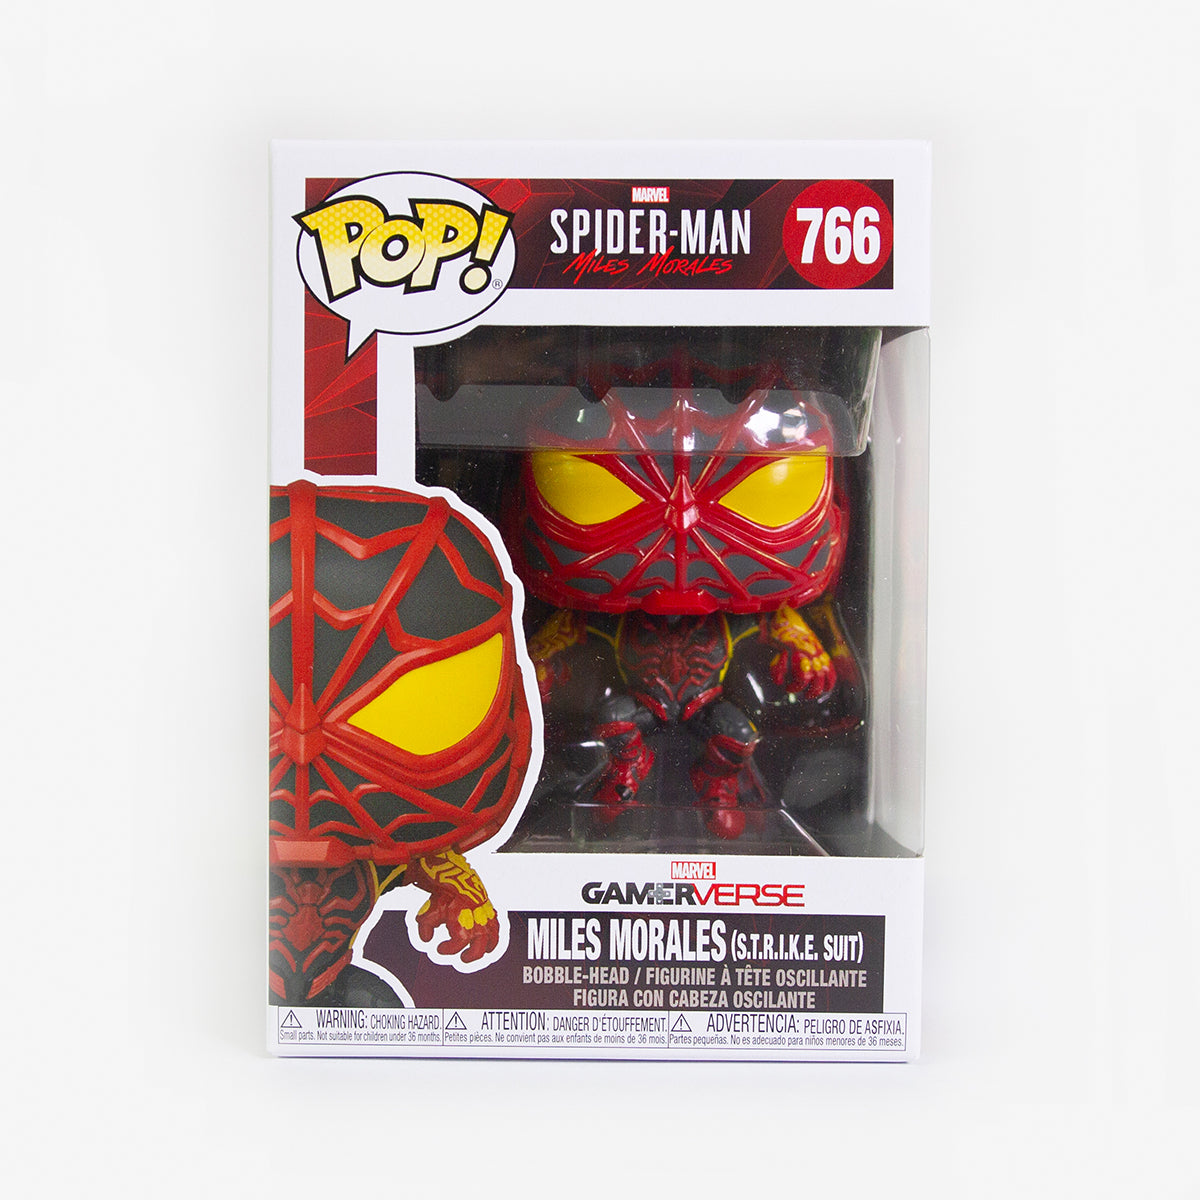 Marvel's Spider-Man - Standard Edition (Imported Version)